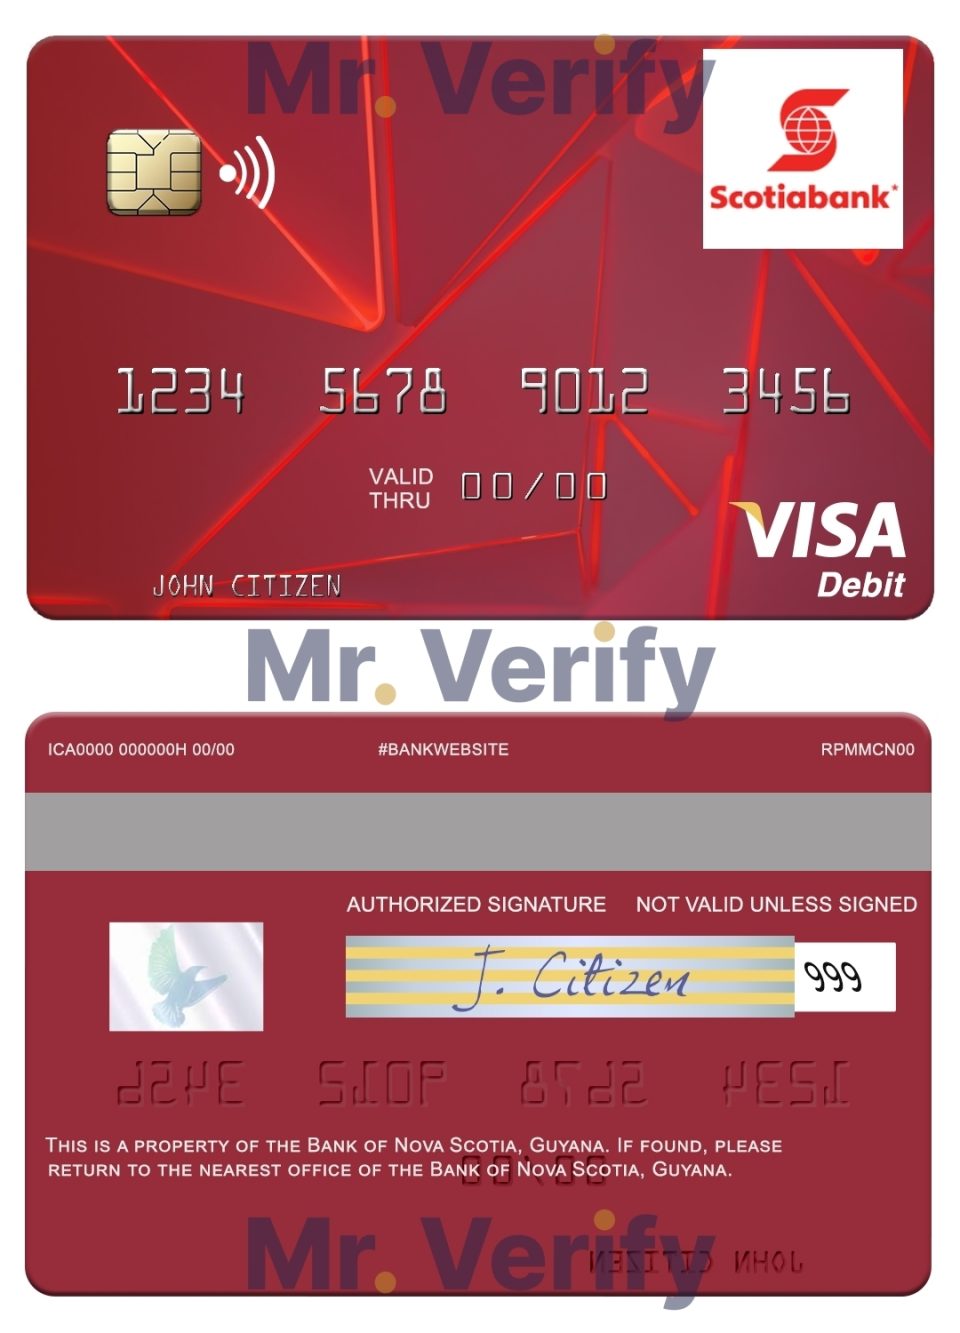 Editable Guyana Bank of Nova Scotia visa card Templates in PSD Format